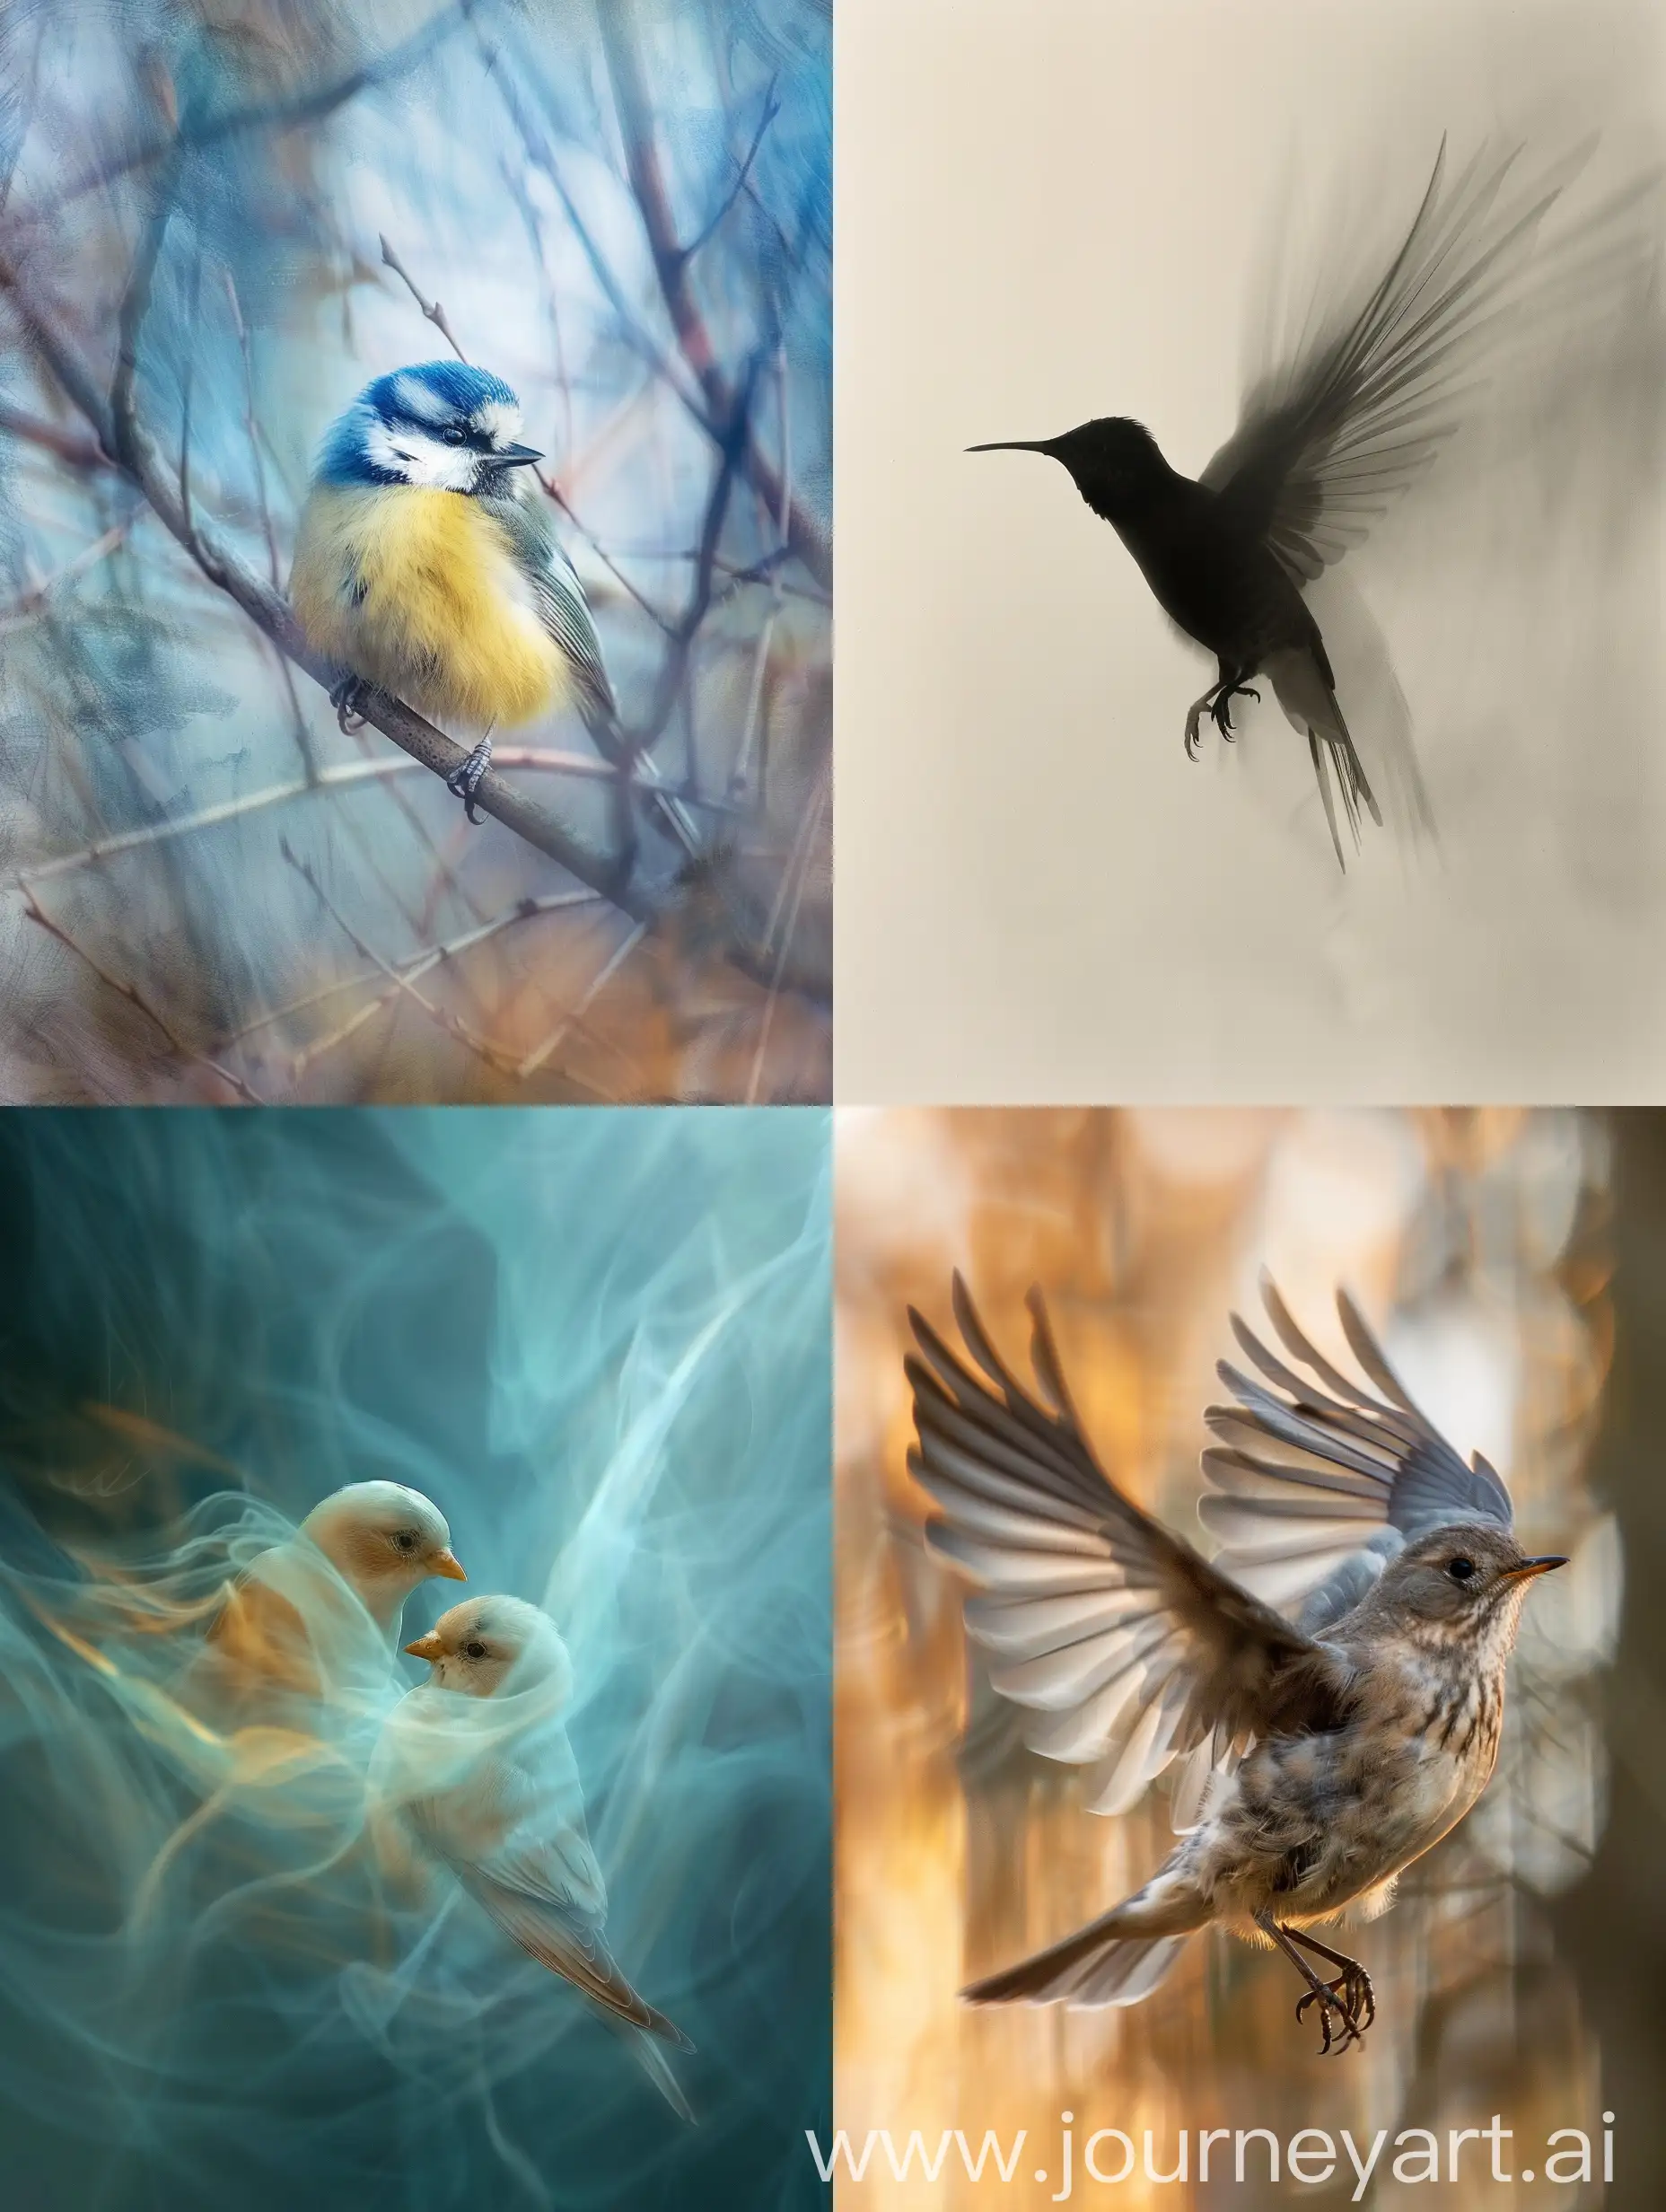 Graceful-Motion-of-a-Delicate-Bird-Soul